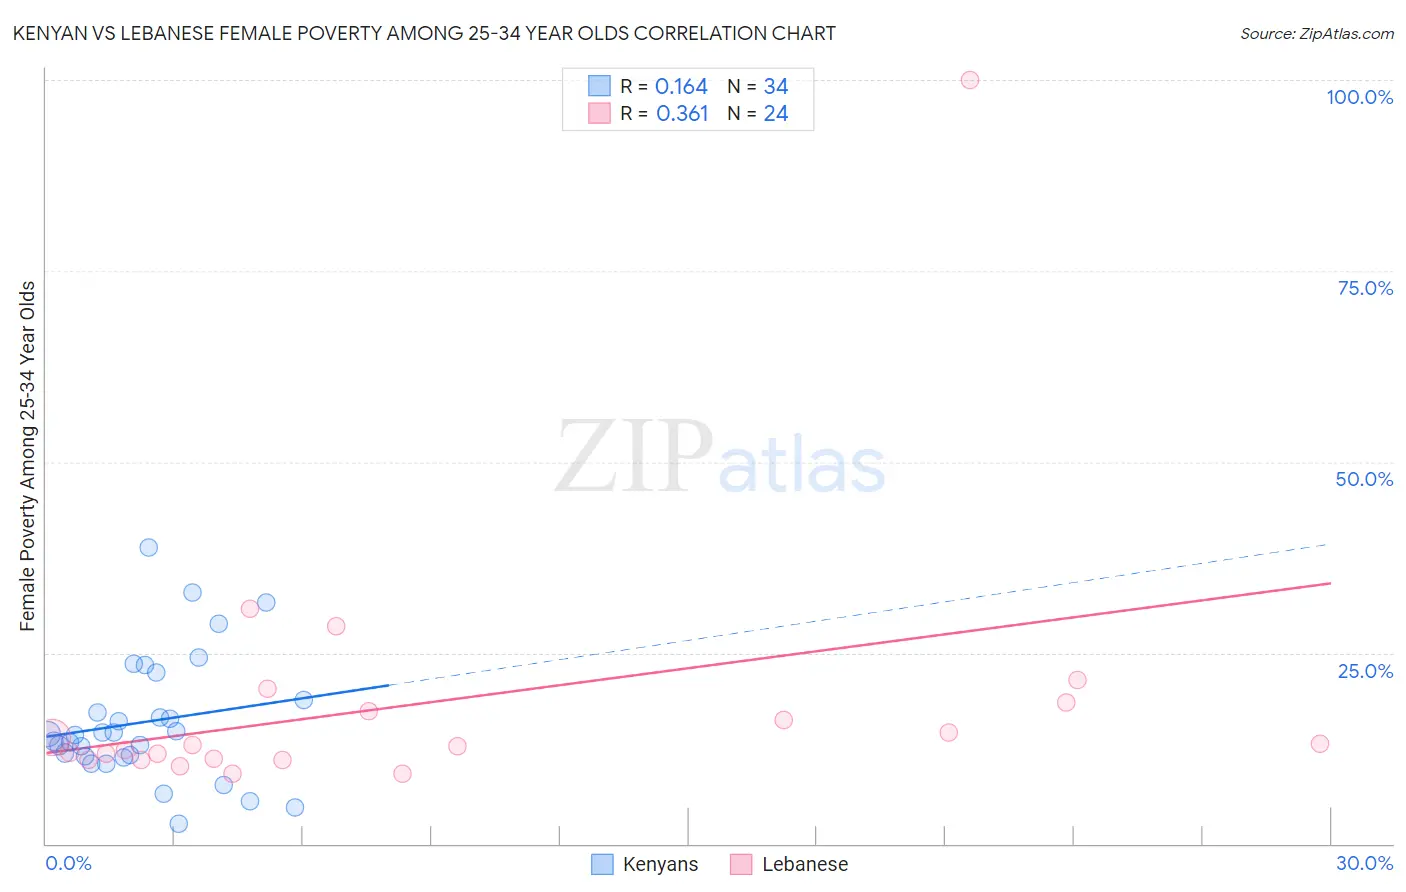 Kenyan vs Lebanese Female Poverty Among 25-34 Year Olds